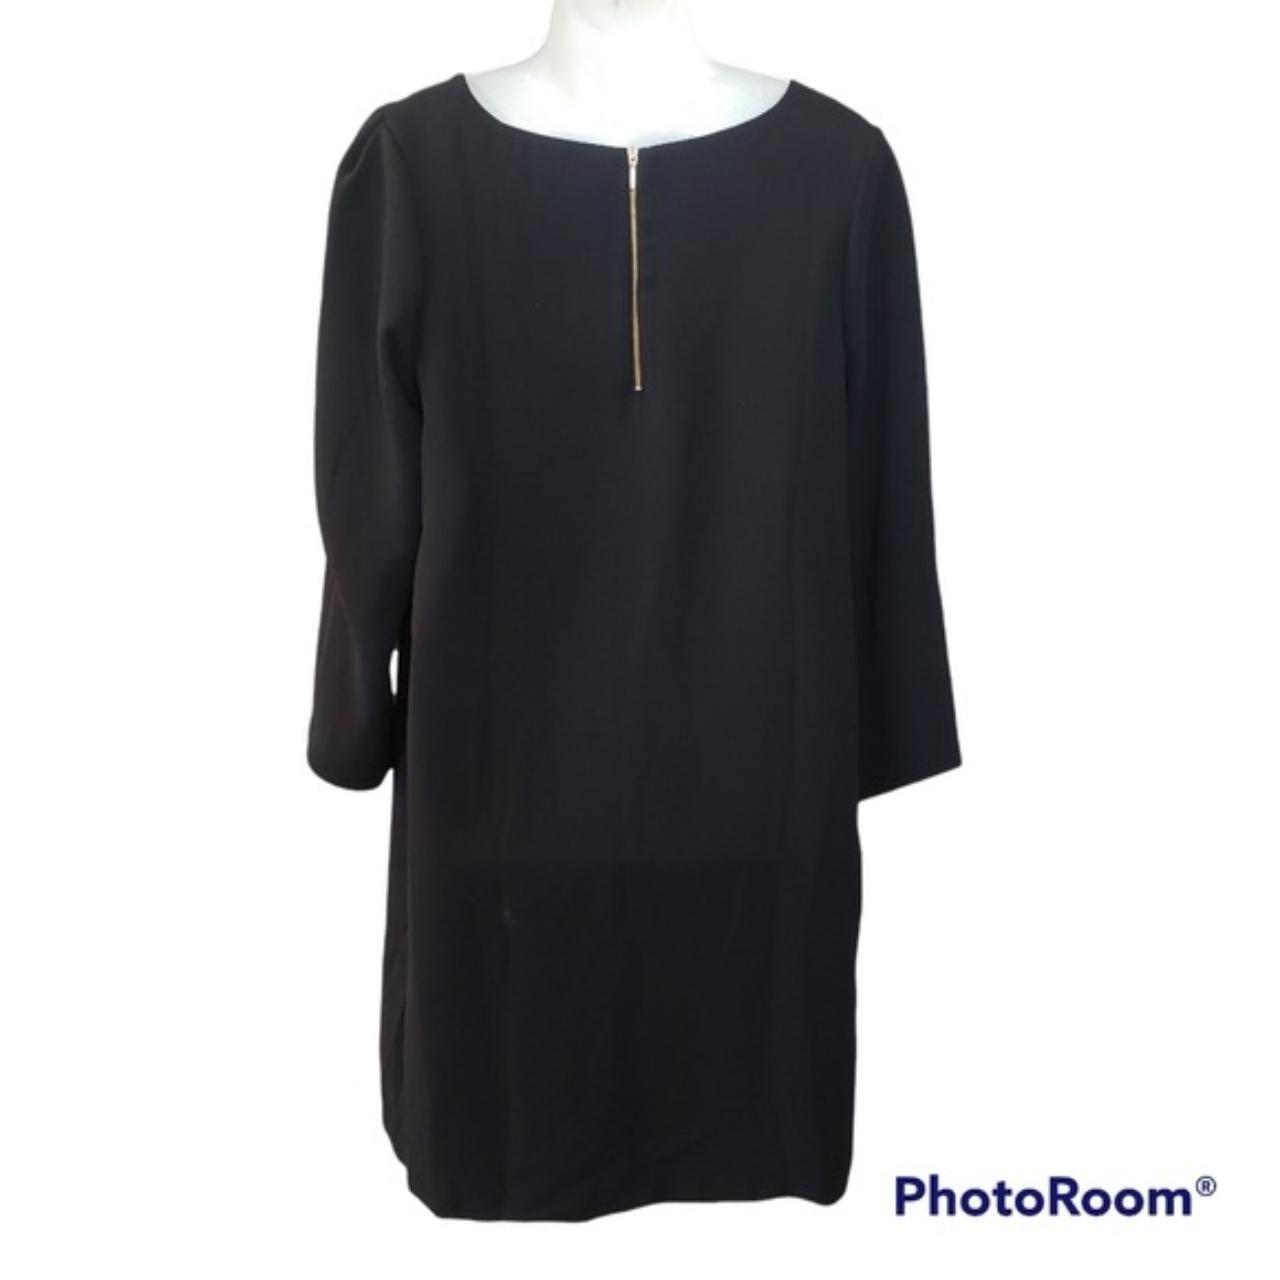 Product Image 2 - Nicole Miller Black Dress. Size